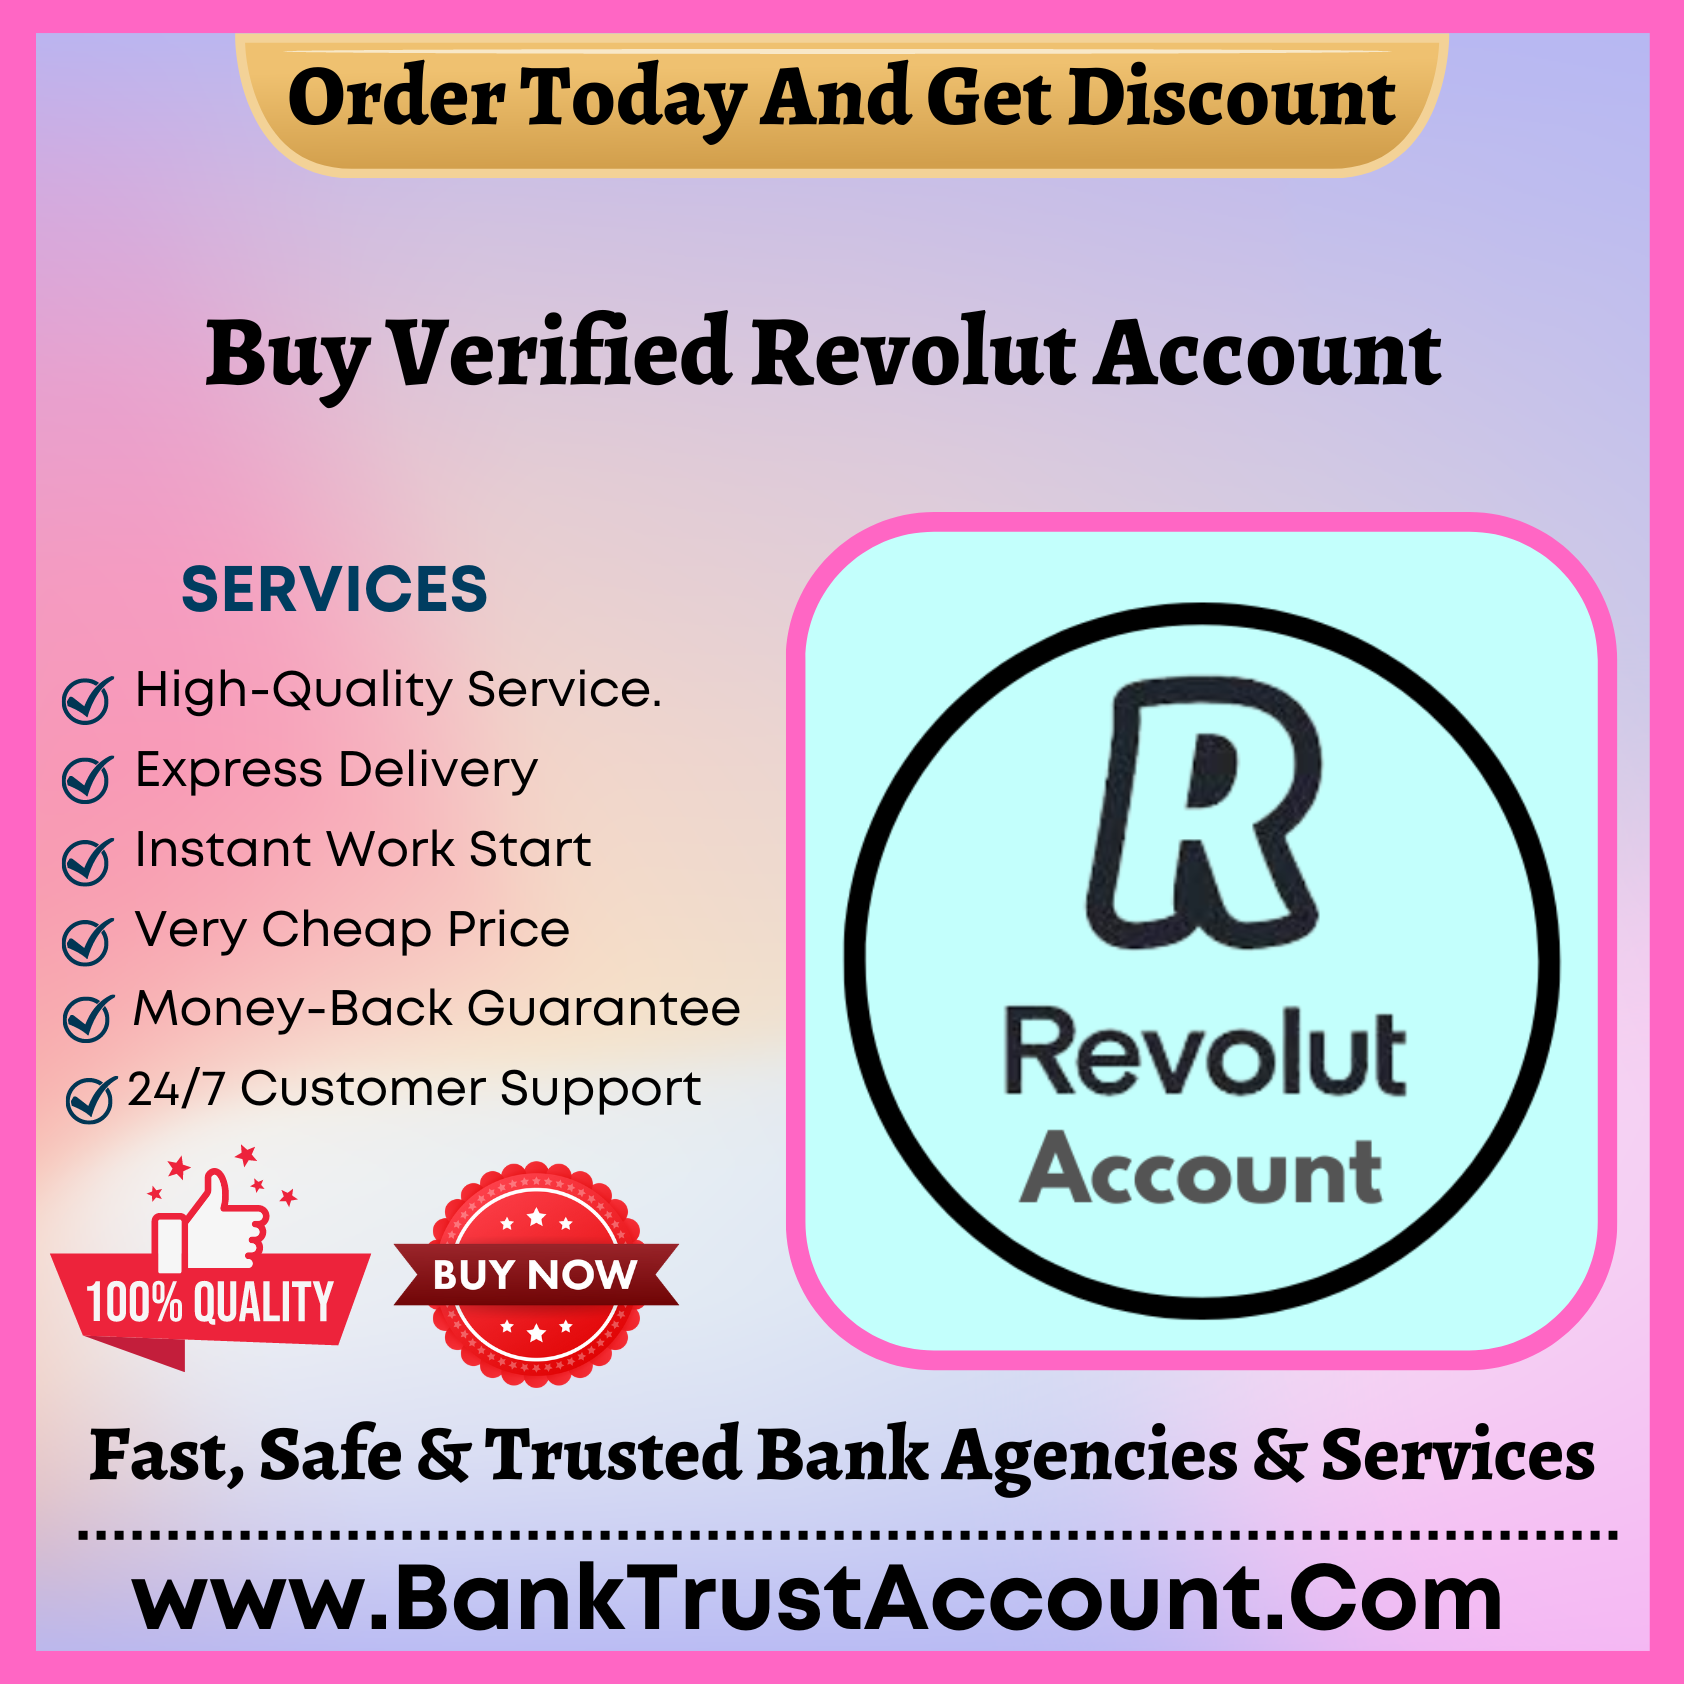 Buy Verified Revolut Account - 100% Fully KYC Verified